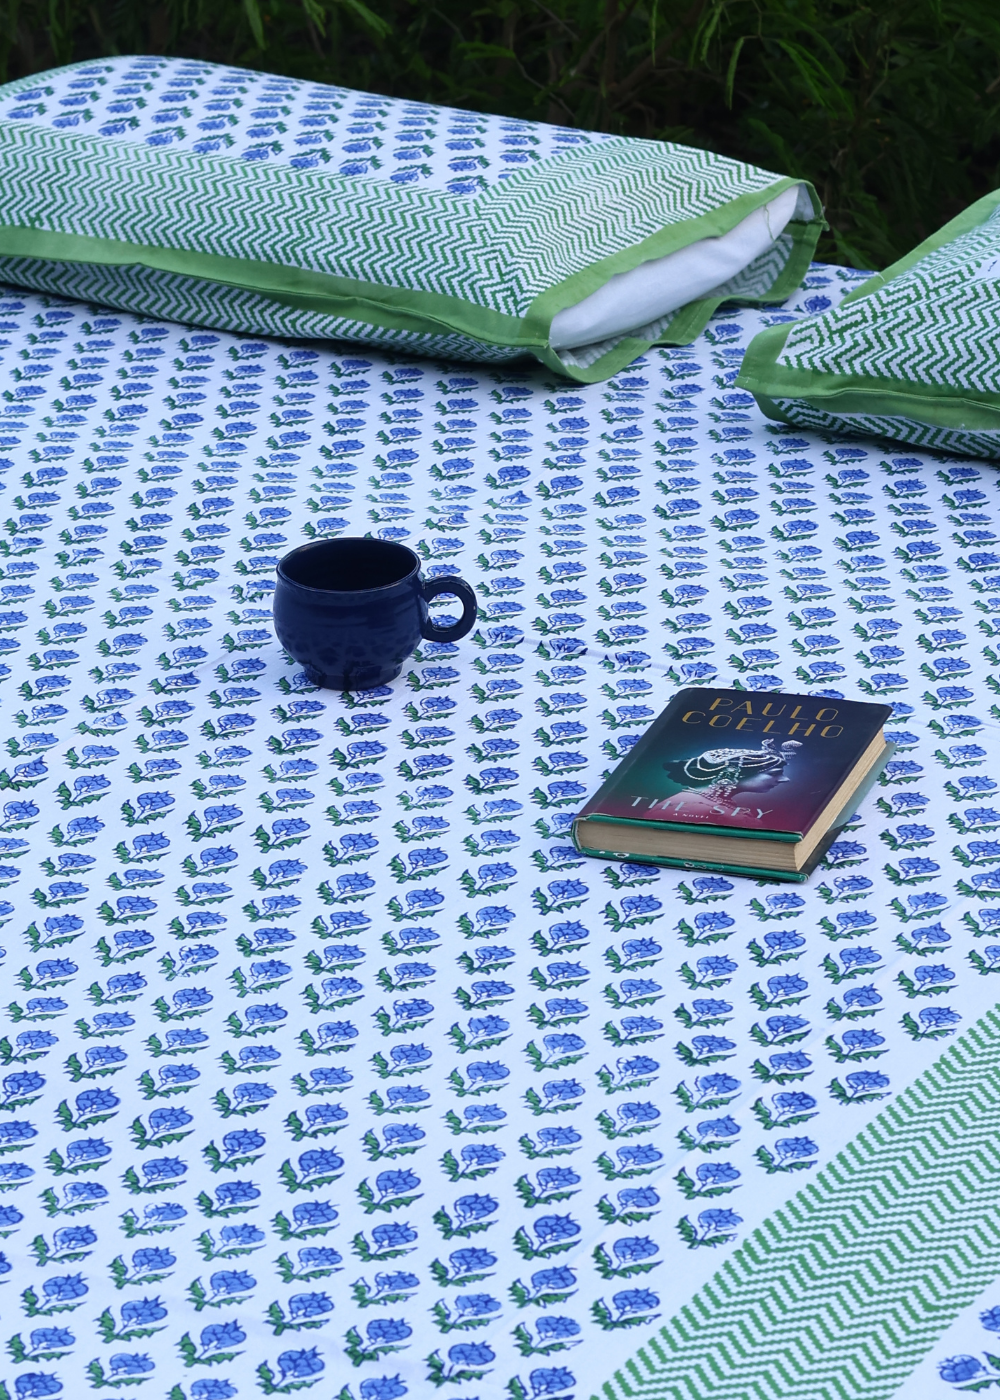 Green & blue motifs block printed bedsheet with books